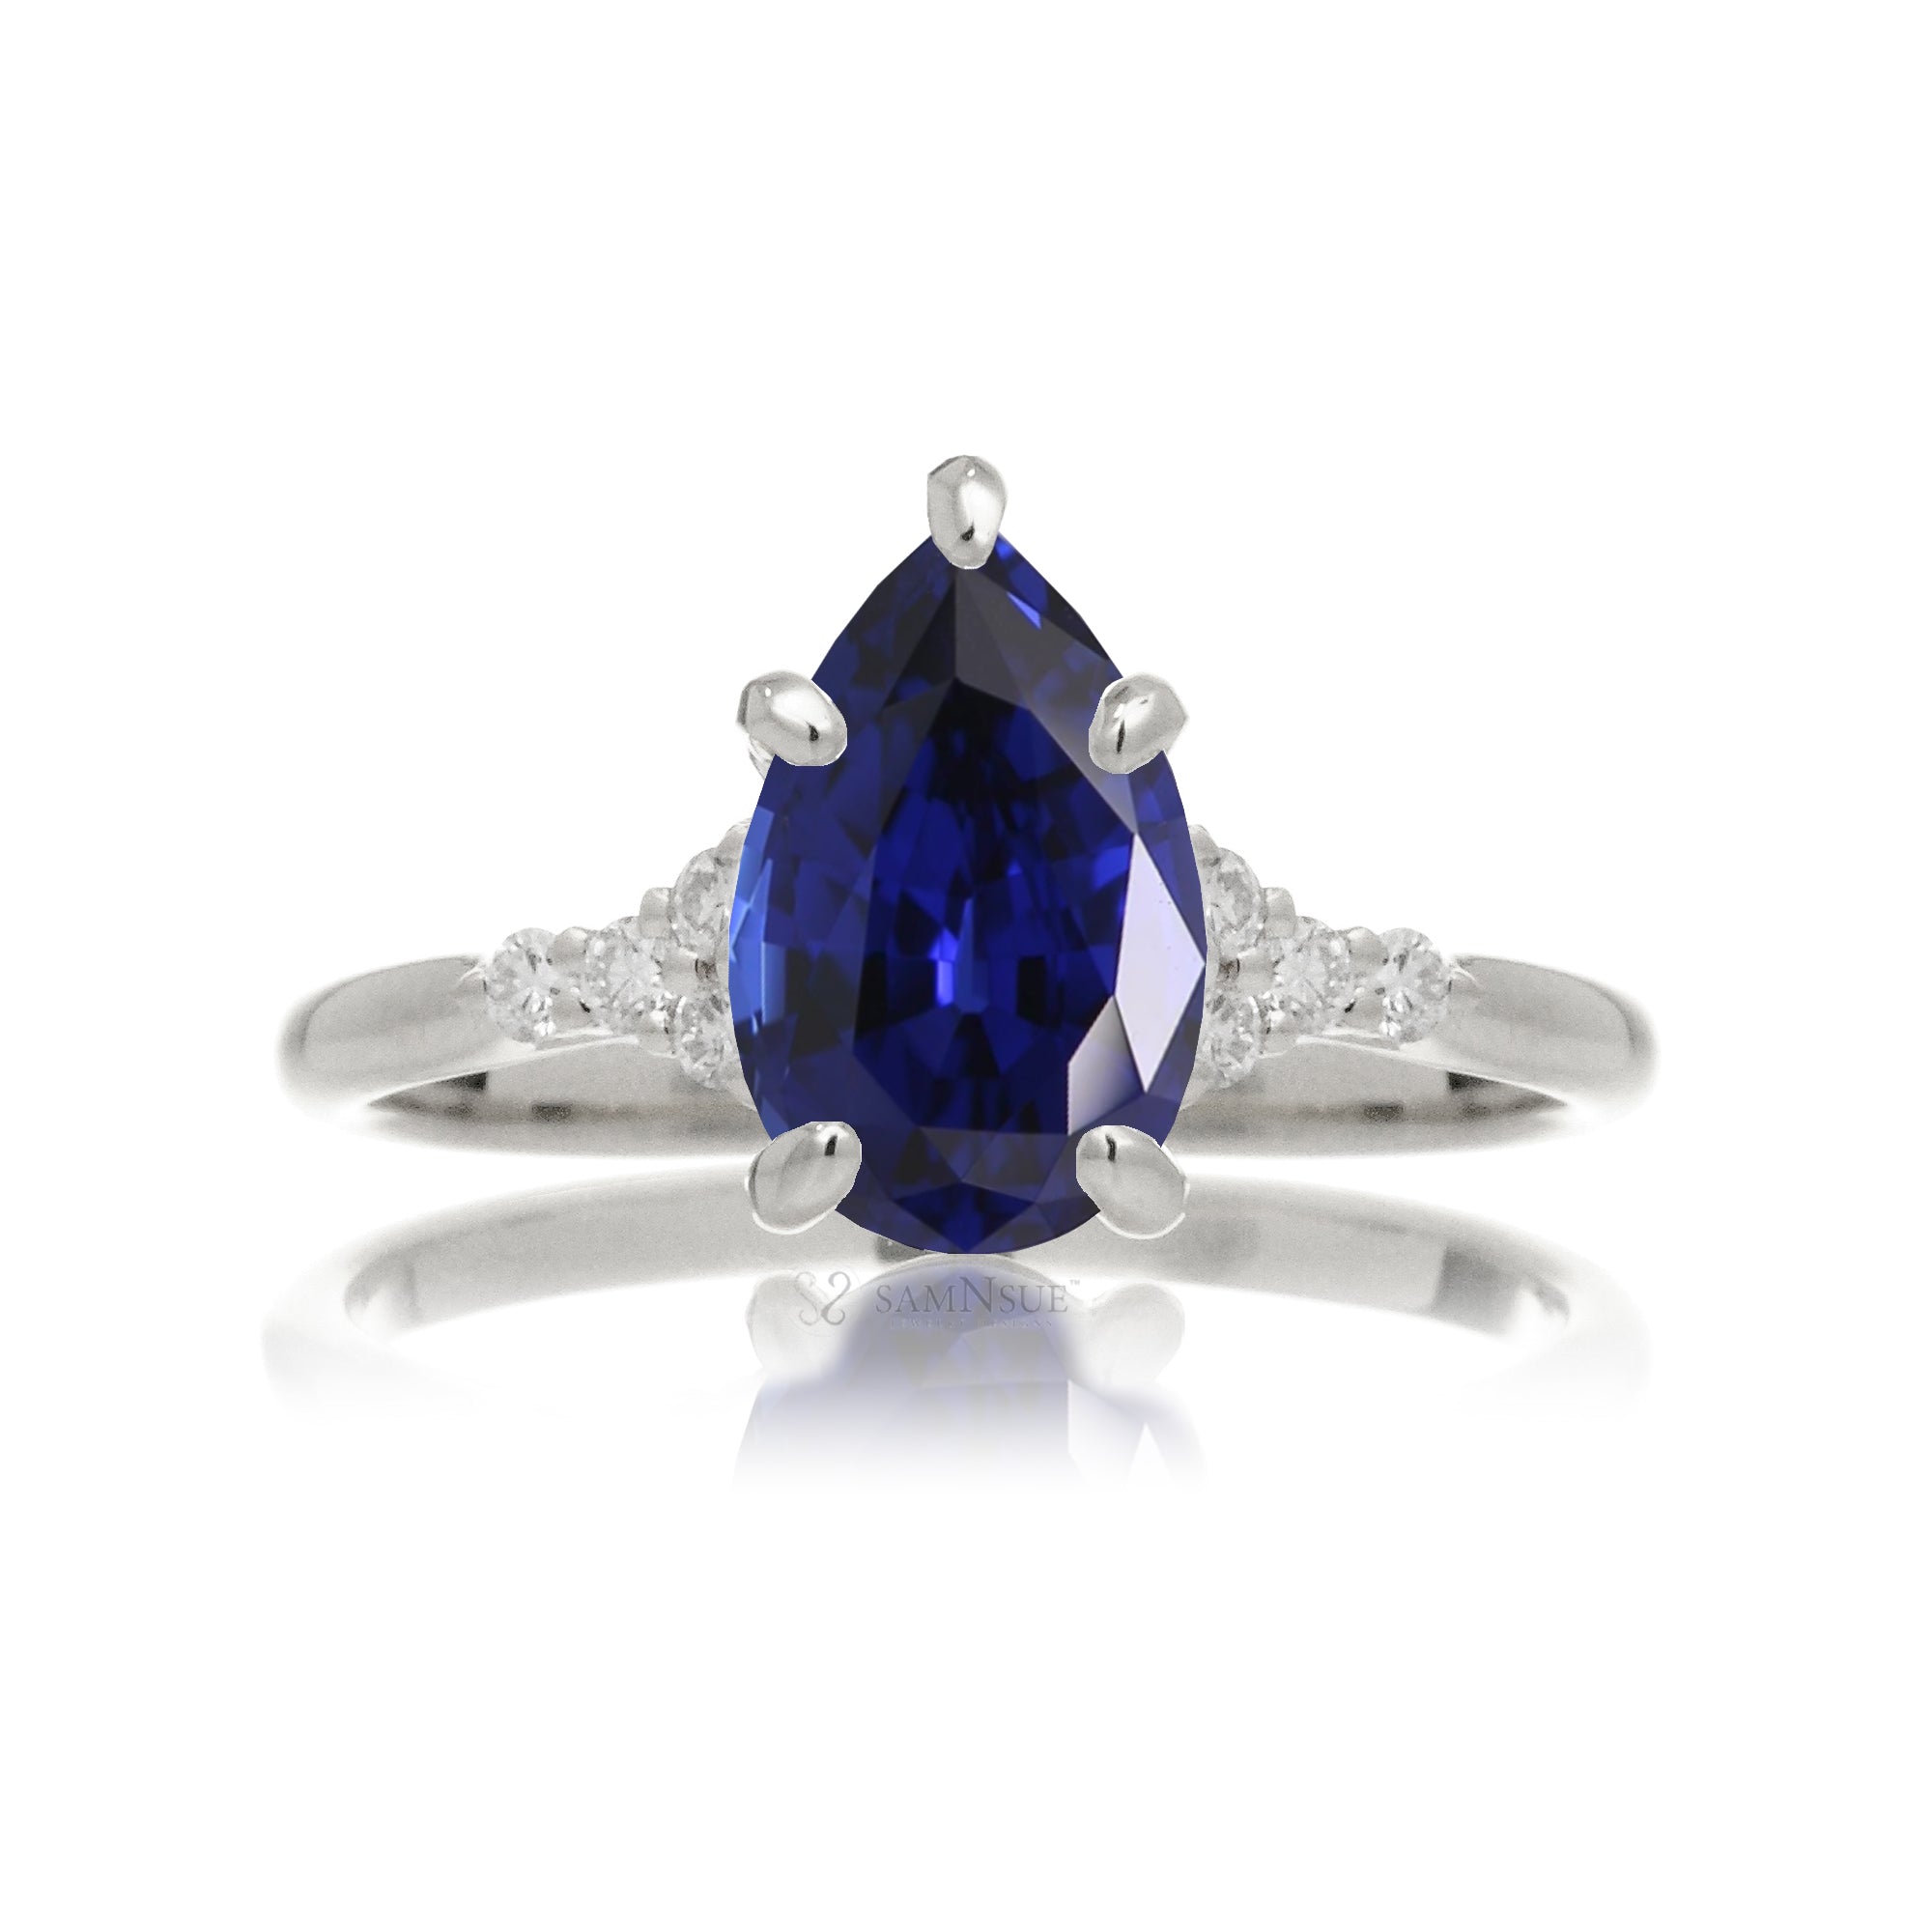 Pear shape blue sapphire diamond ring in white gold - the Chloe lab-grown